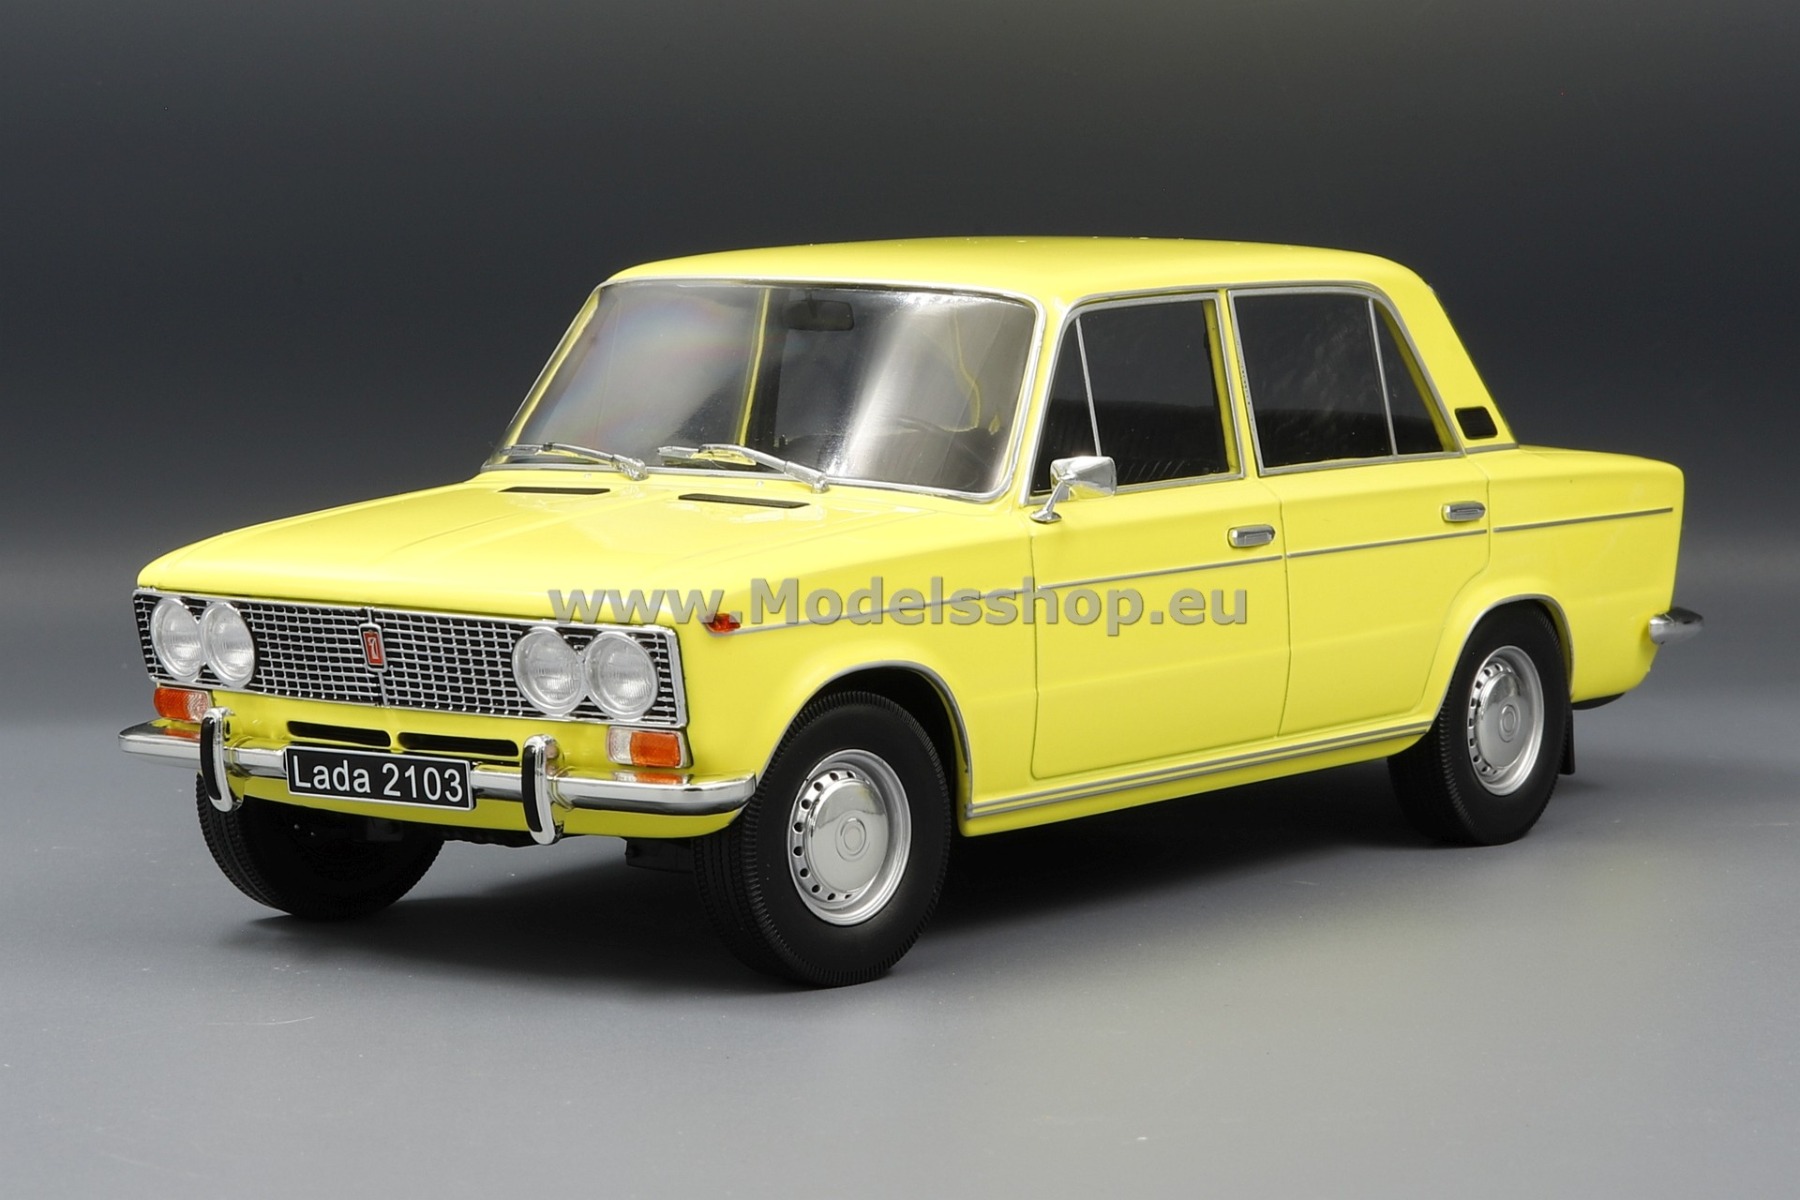 LADA / VAZ 2103, 1975 /bright yellow (RAL1016) with black interior/